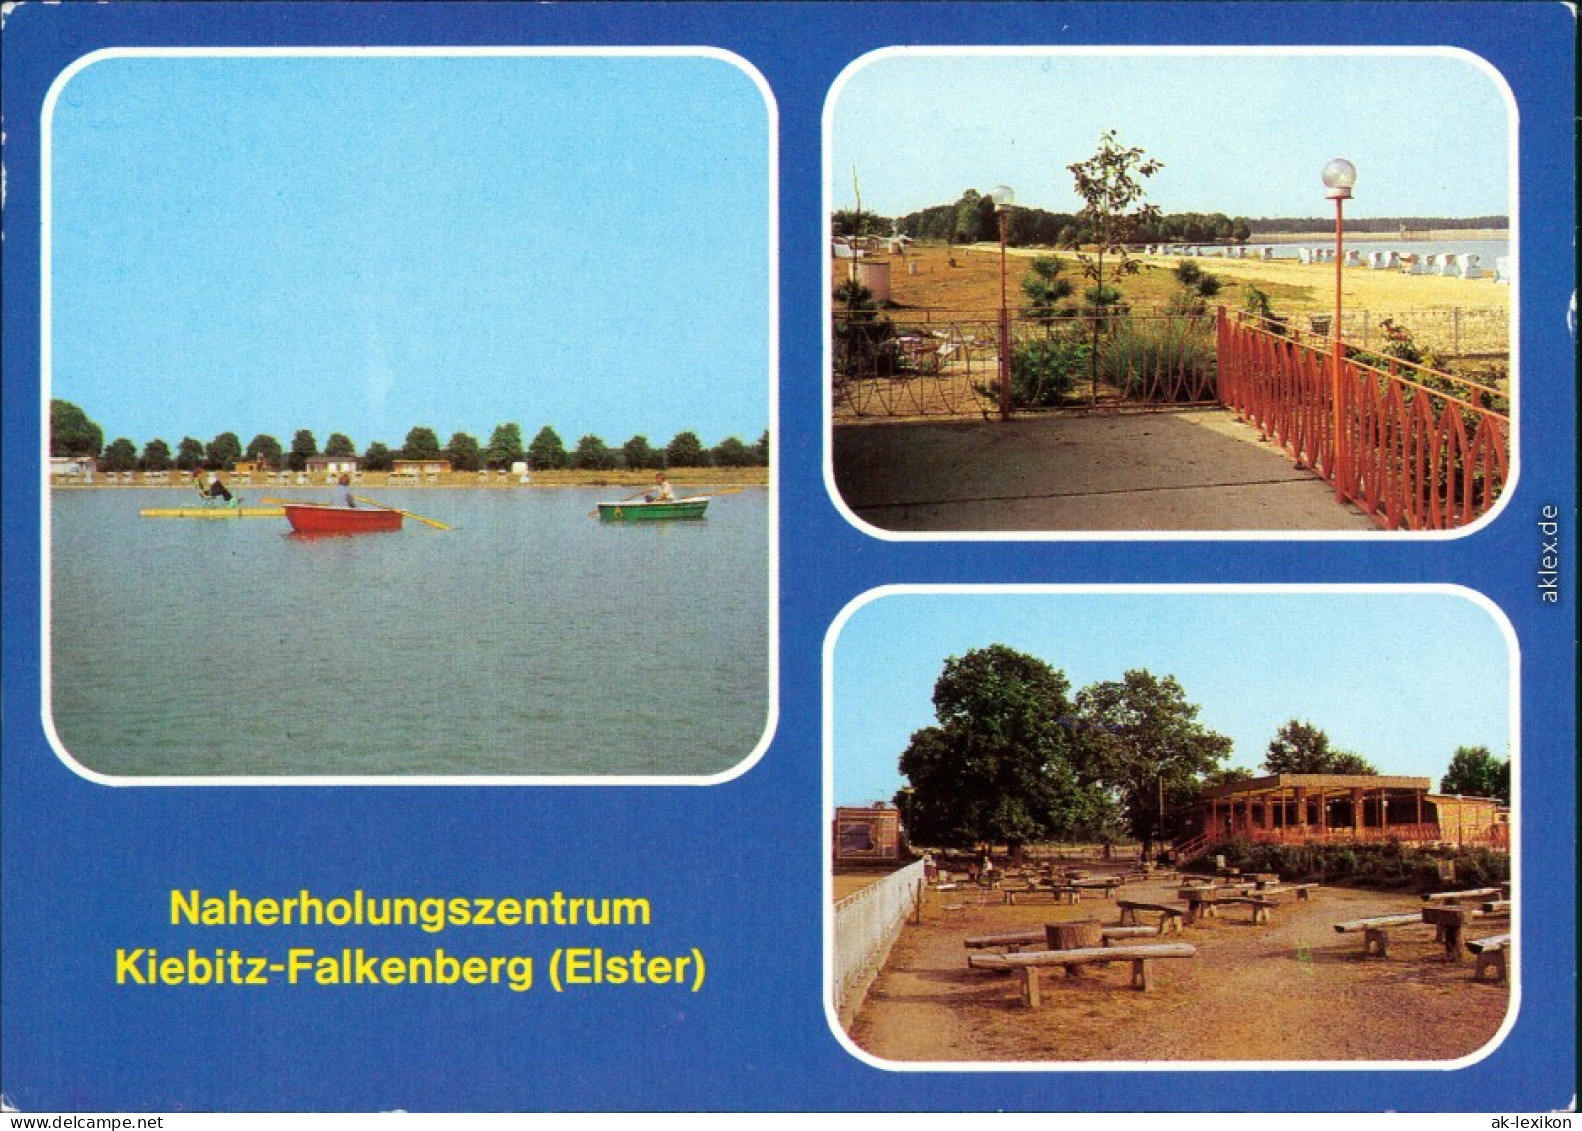 Ansichtskarte Falkenberg (Elster) Naherholungszentrum Kiebitz-Falkenberg 1984 - Falkenberg